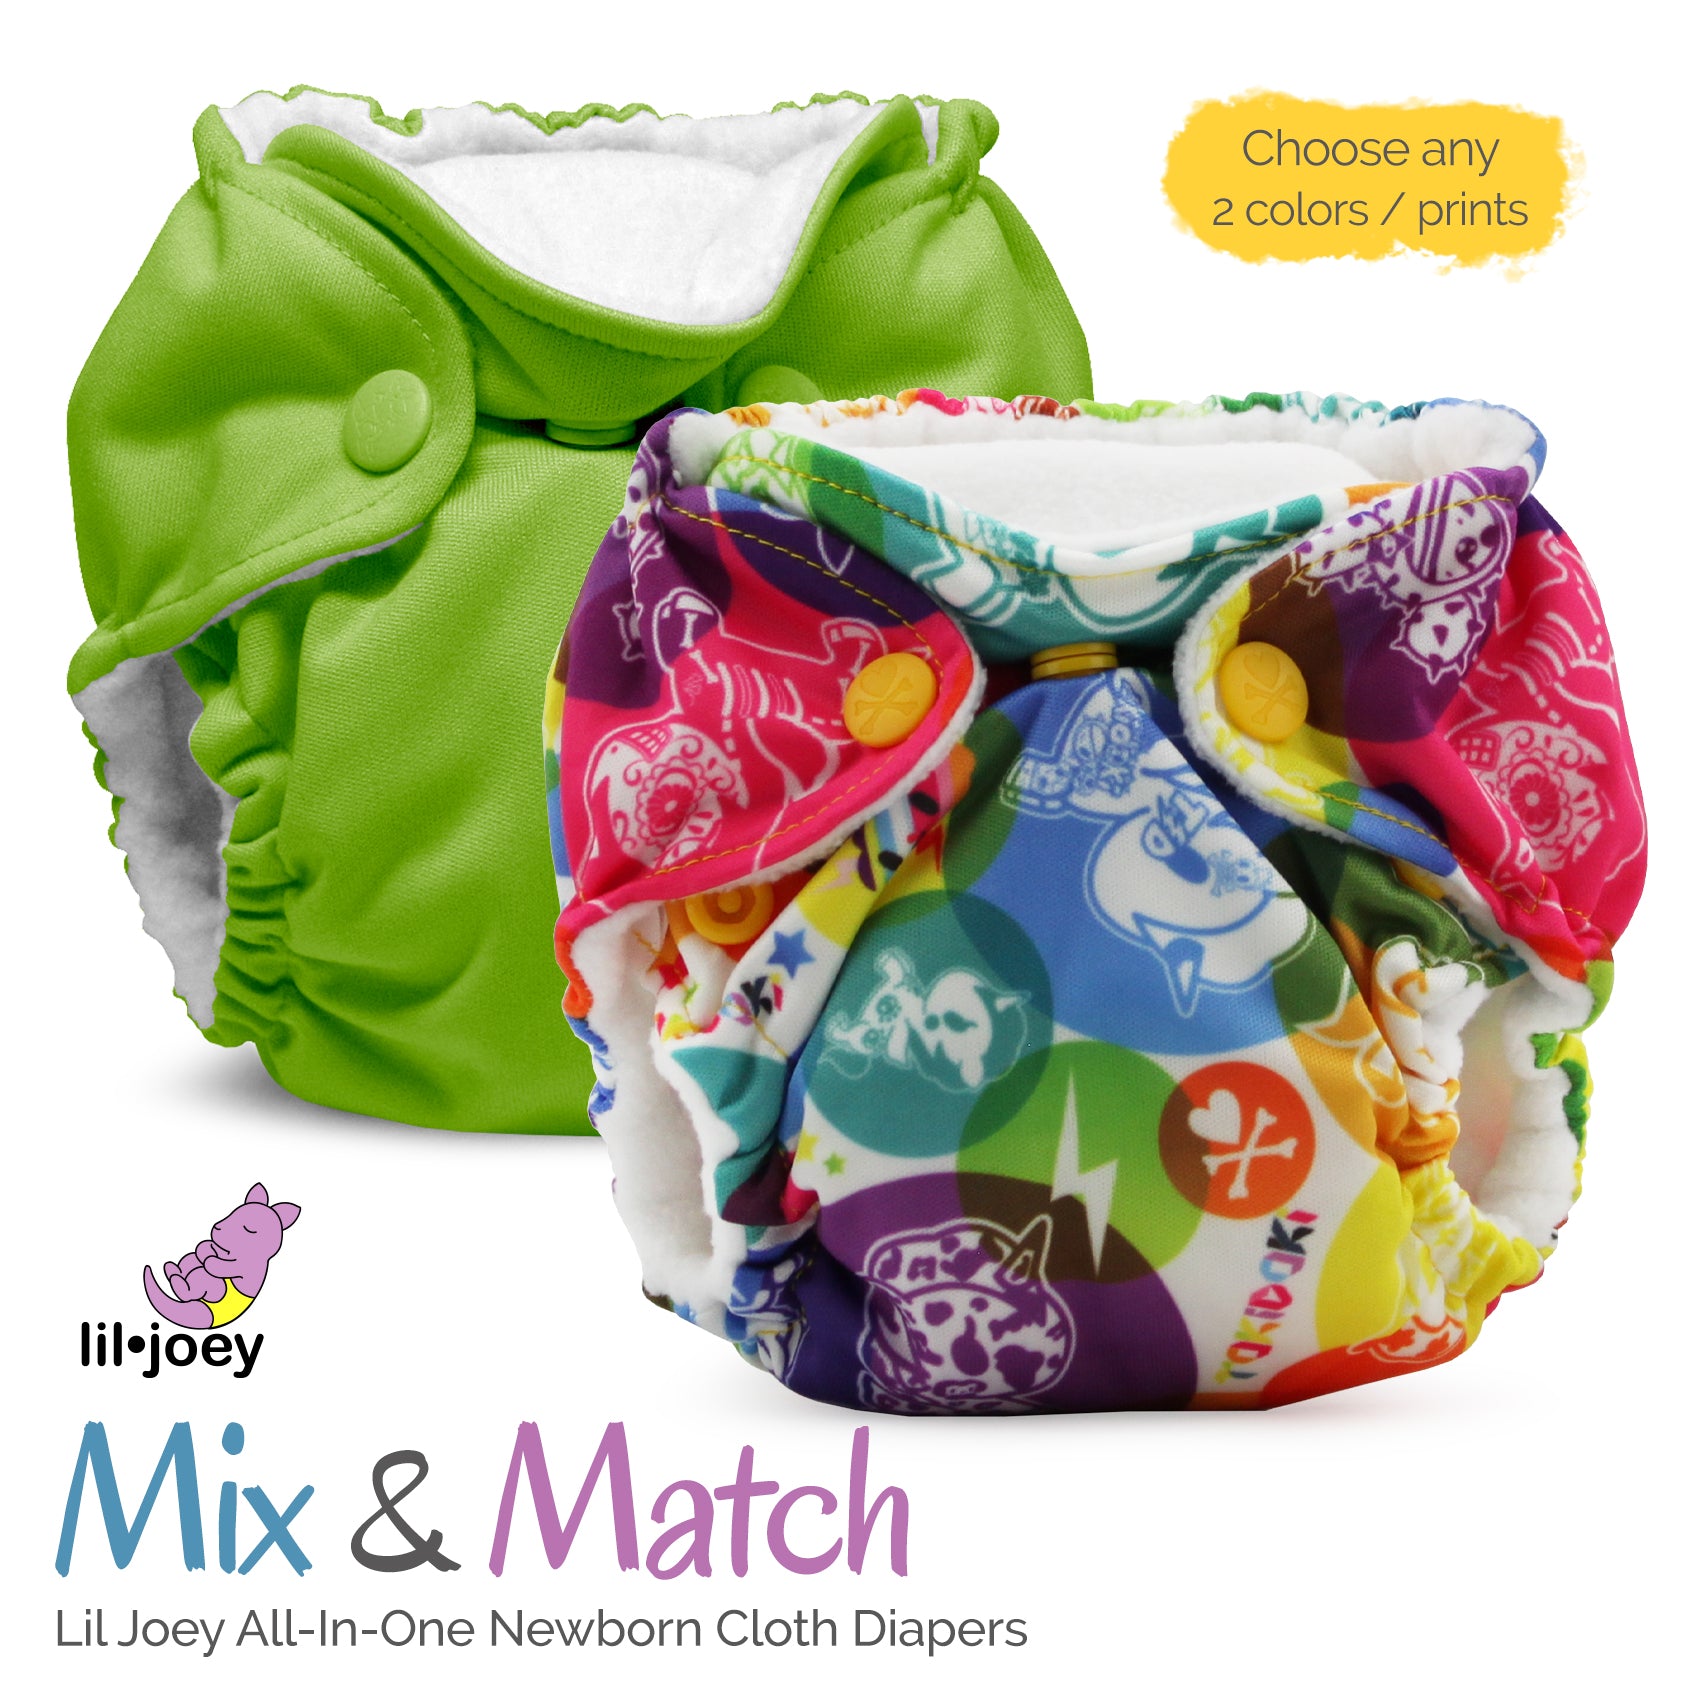 Mix & Match* Lil Joey Newborn AIO Cloth Diaper - colors and prints!